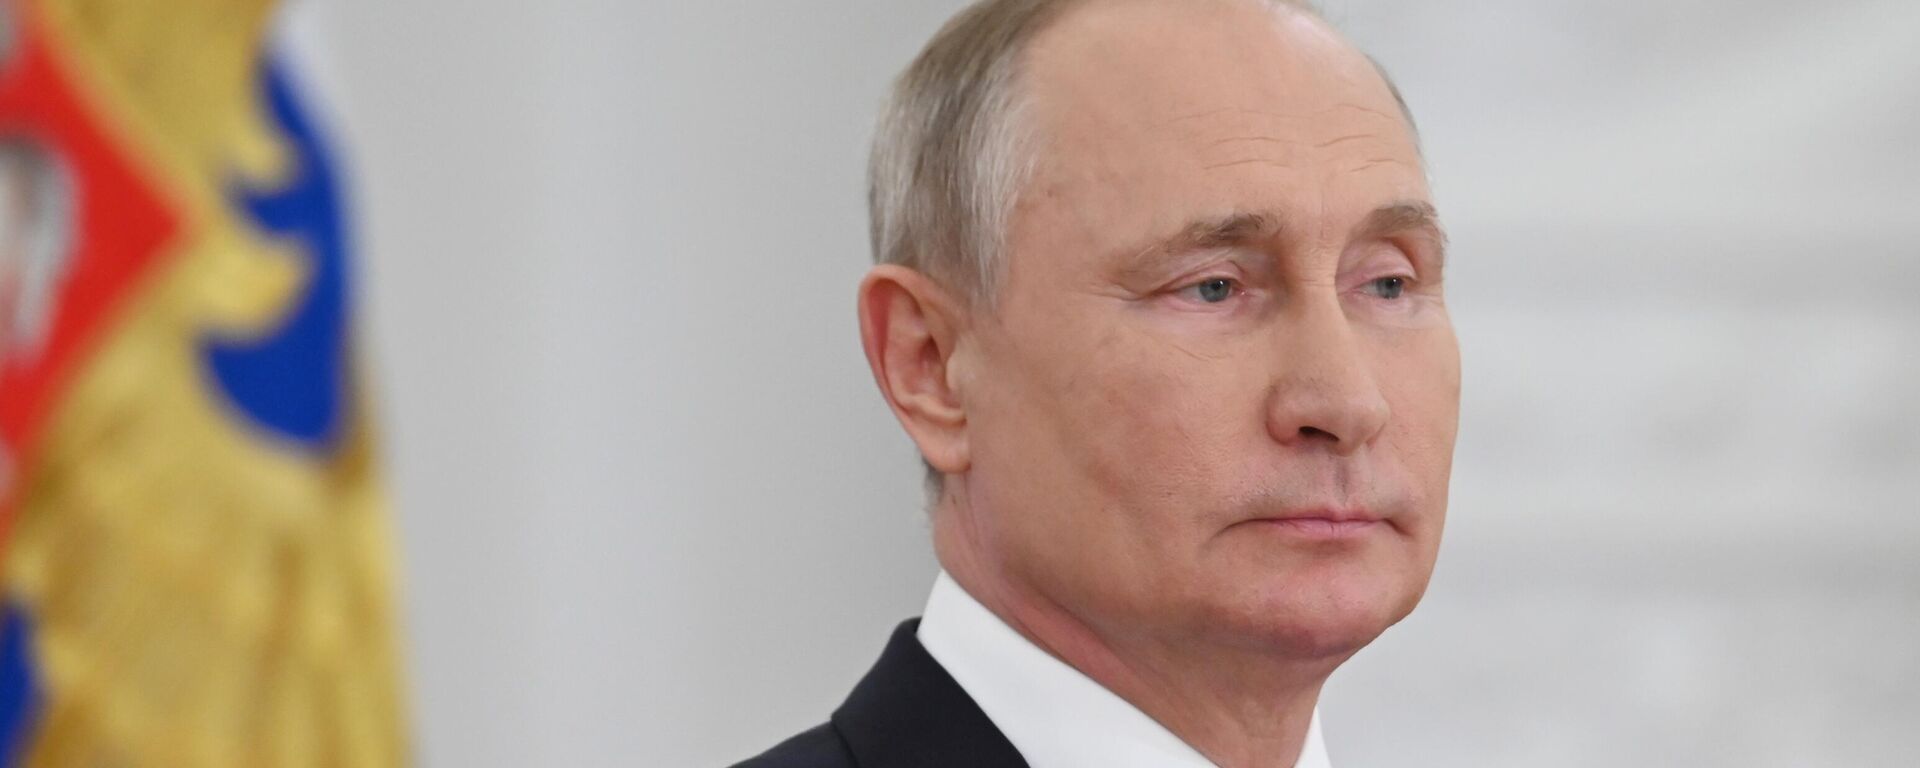 Vladímir Putin, presidente de Rusia - Sputnik Mundo, 1920, 27.10.2021